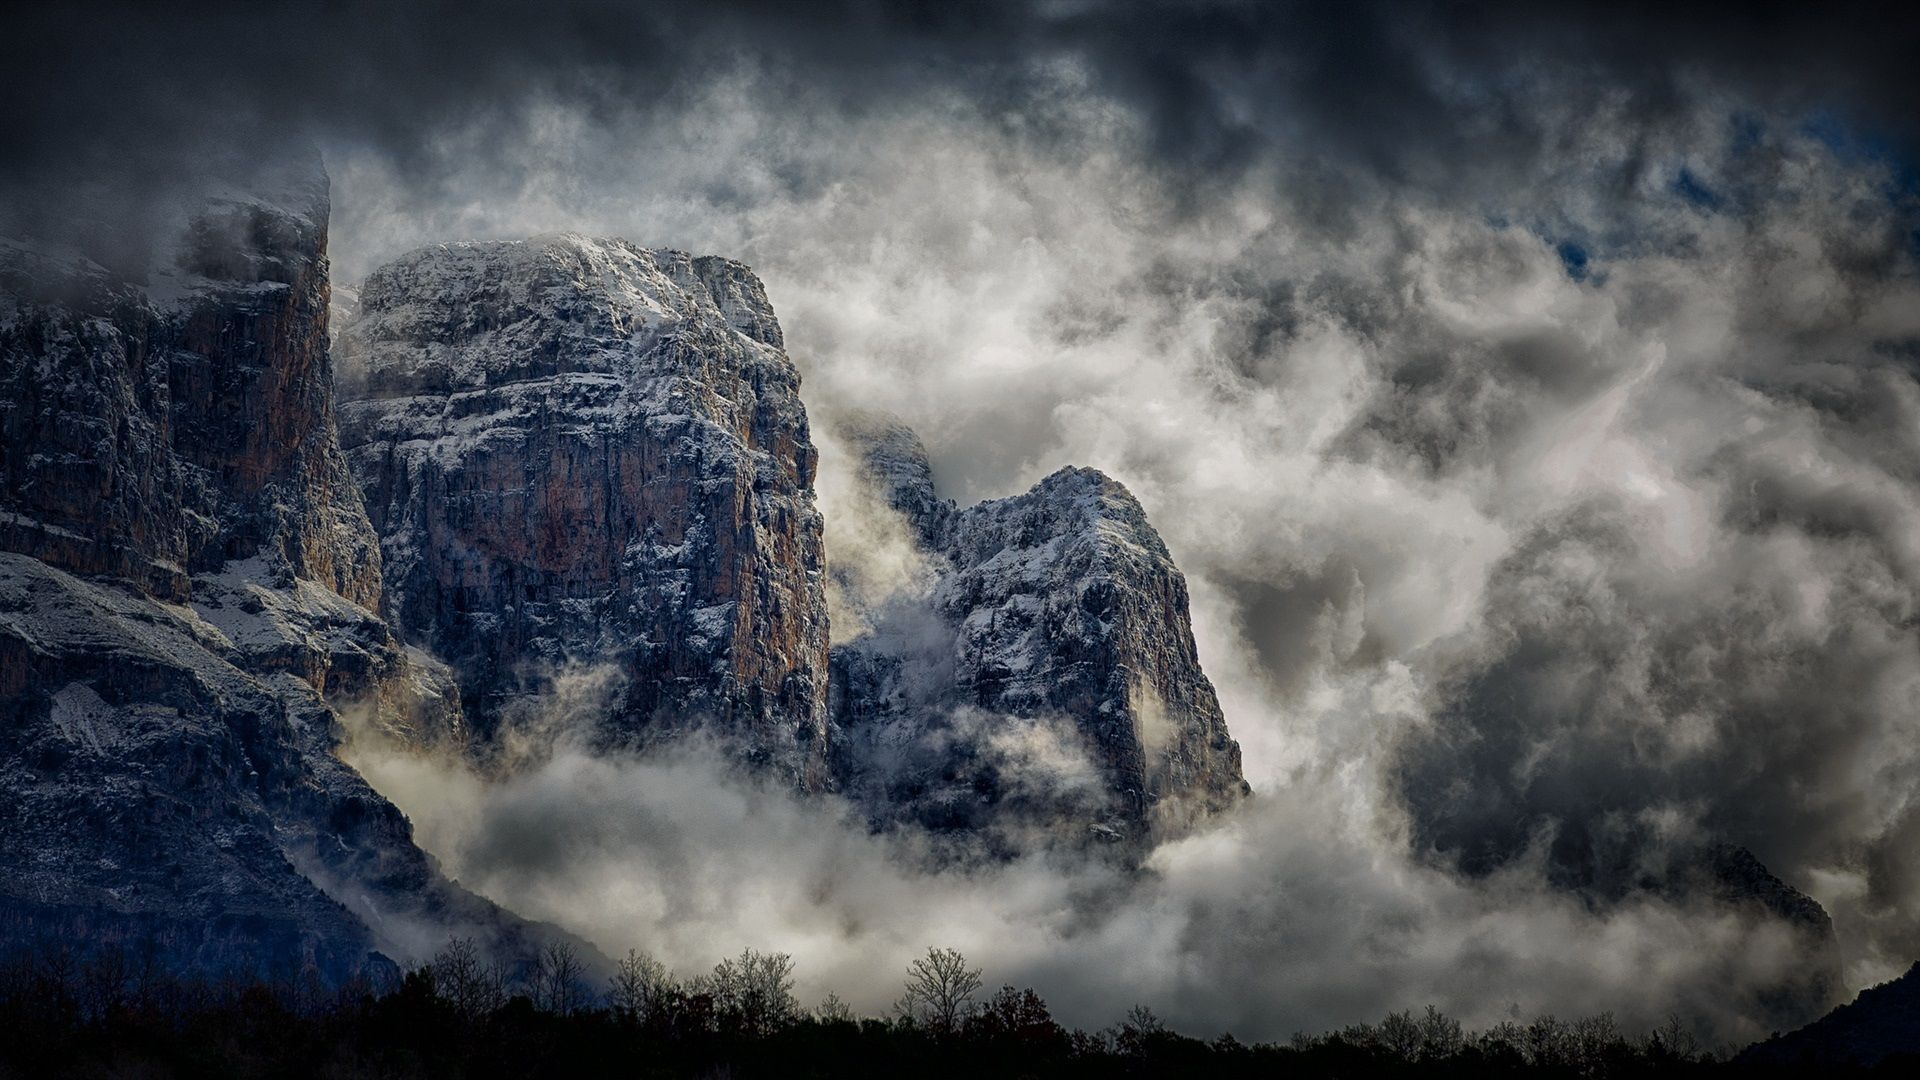  Felsen Hintergrundbild 1920x1080. Schöne Landschaft, Berge, Felsen, Bäume, Wolken, Nebel 1920x1080 Full HD 2K Hintergrundbilder, HD, Bild